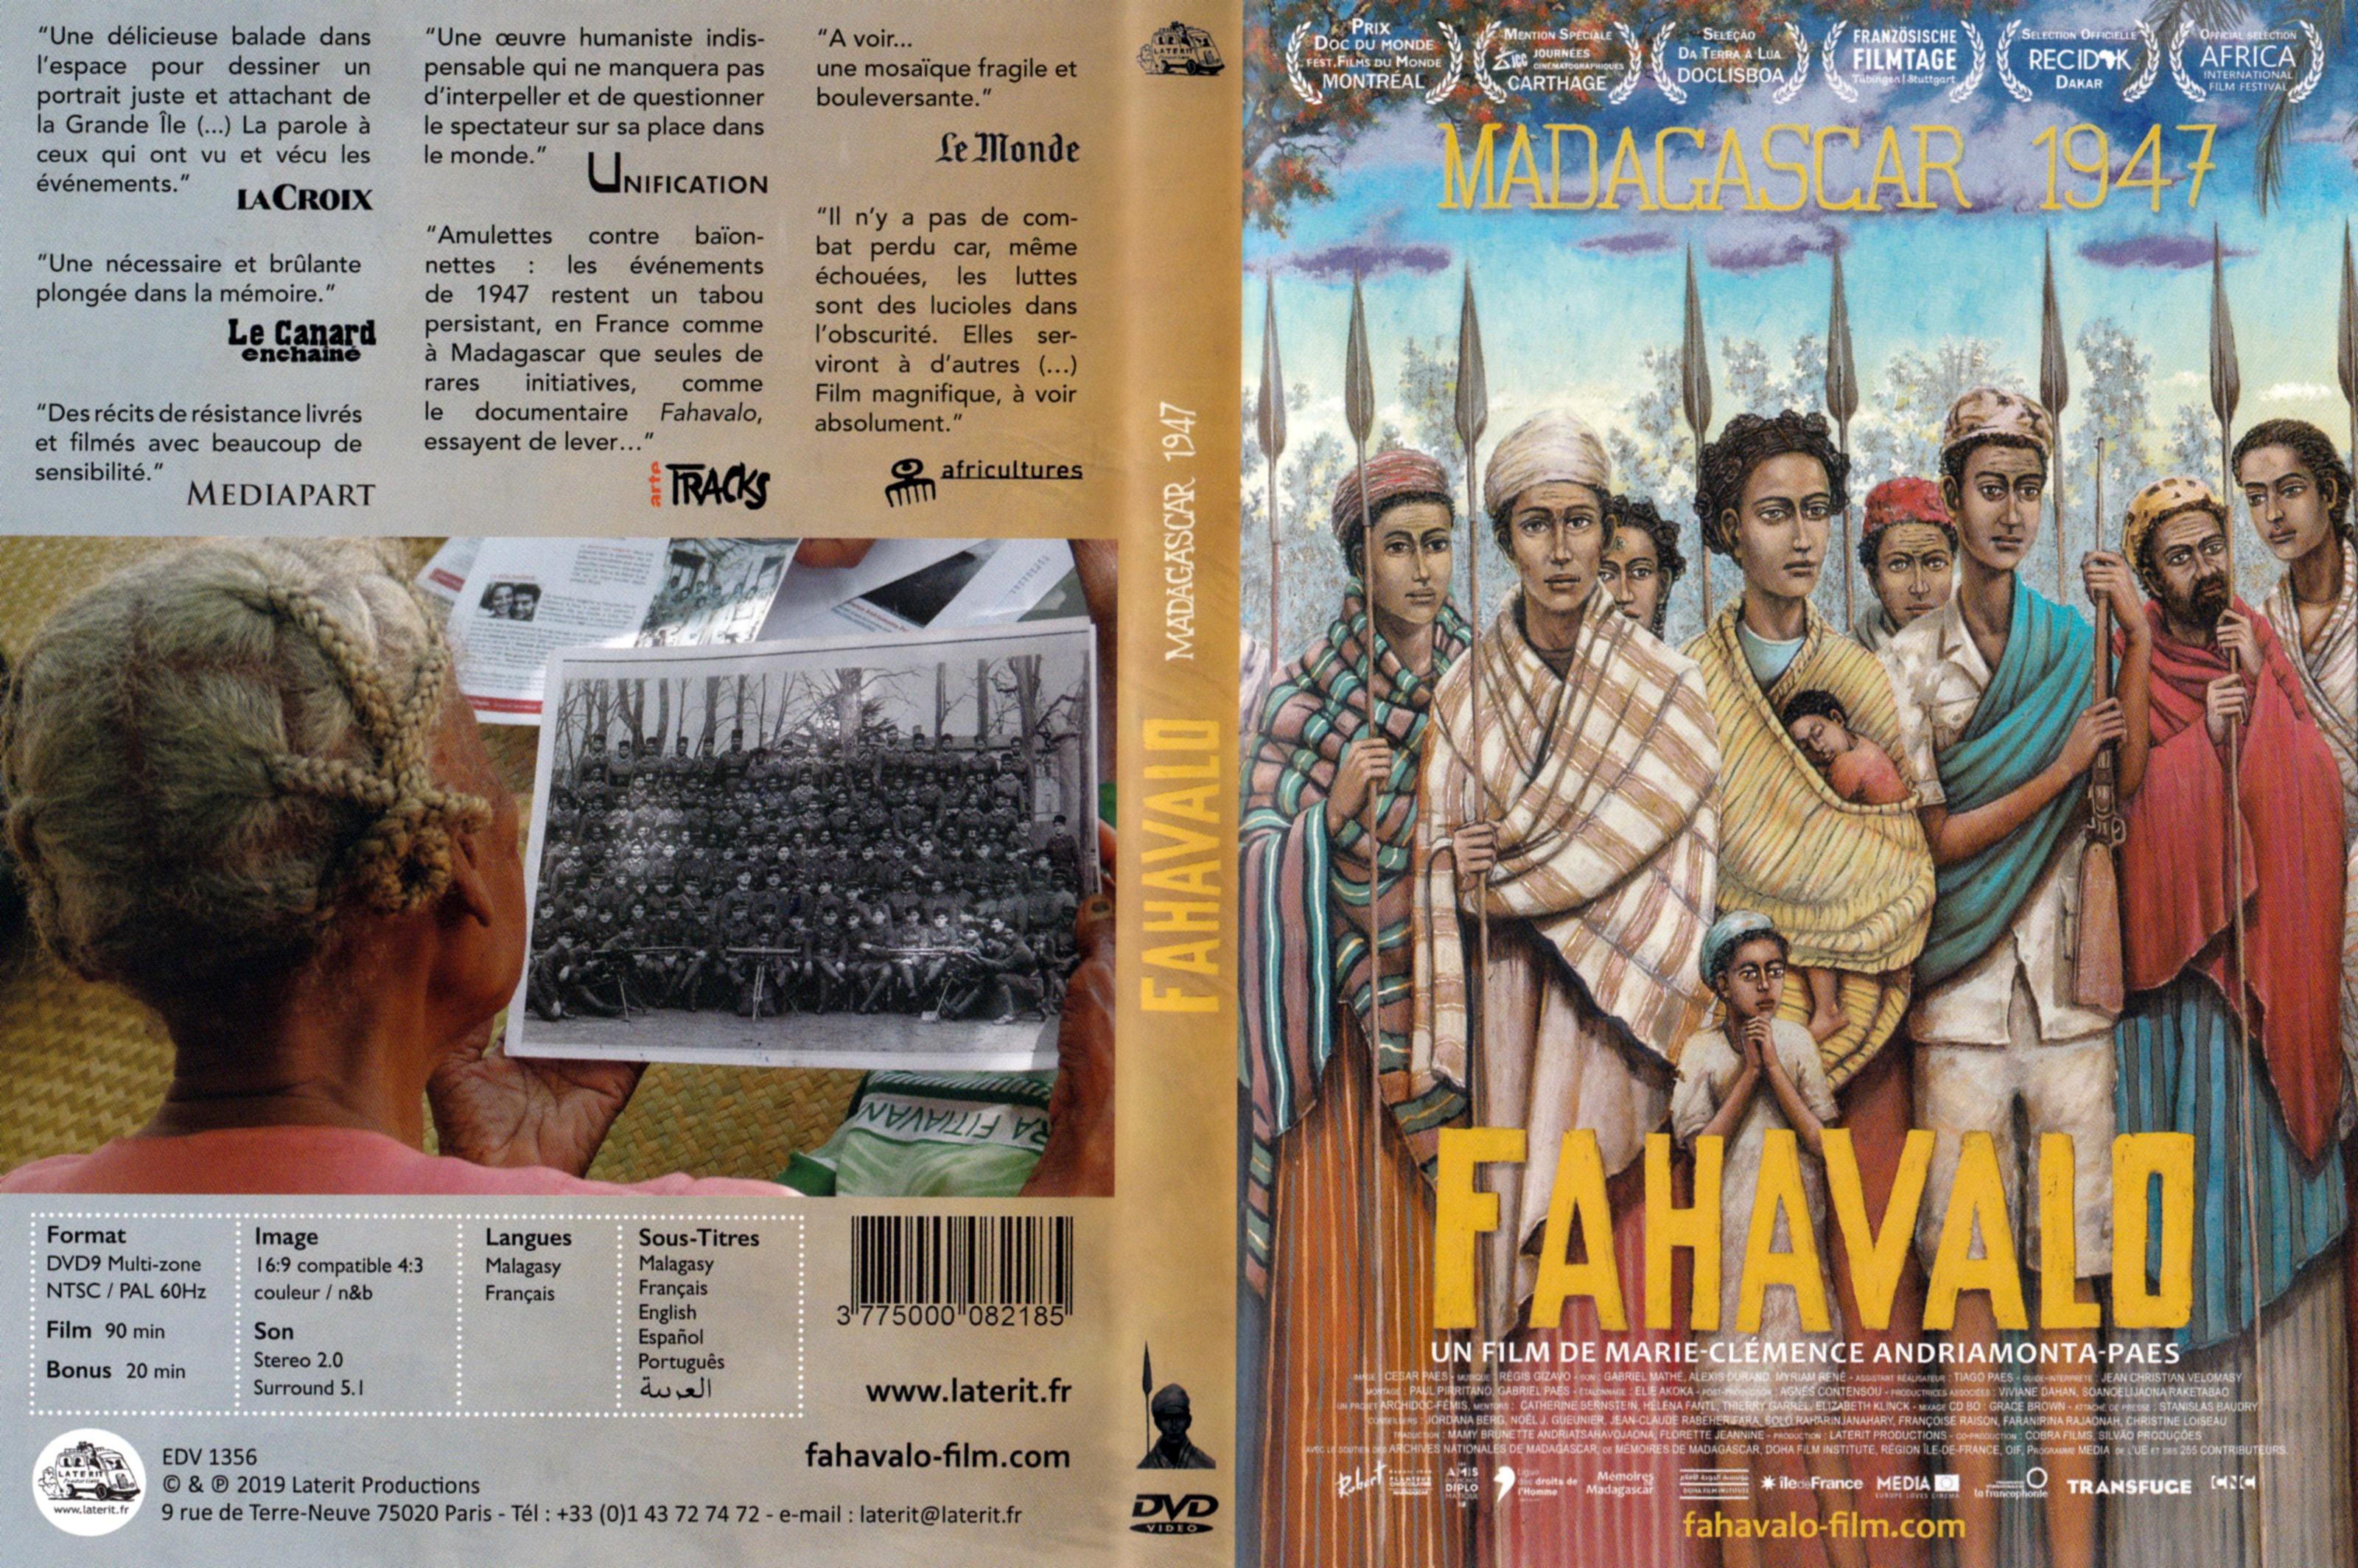 Jaquette DVD Fahavalo v2